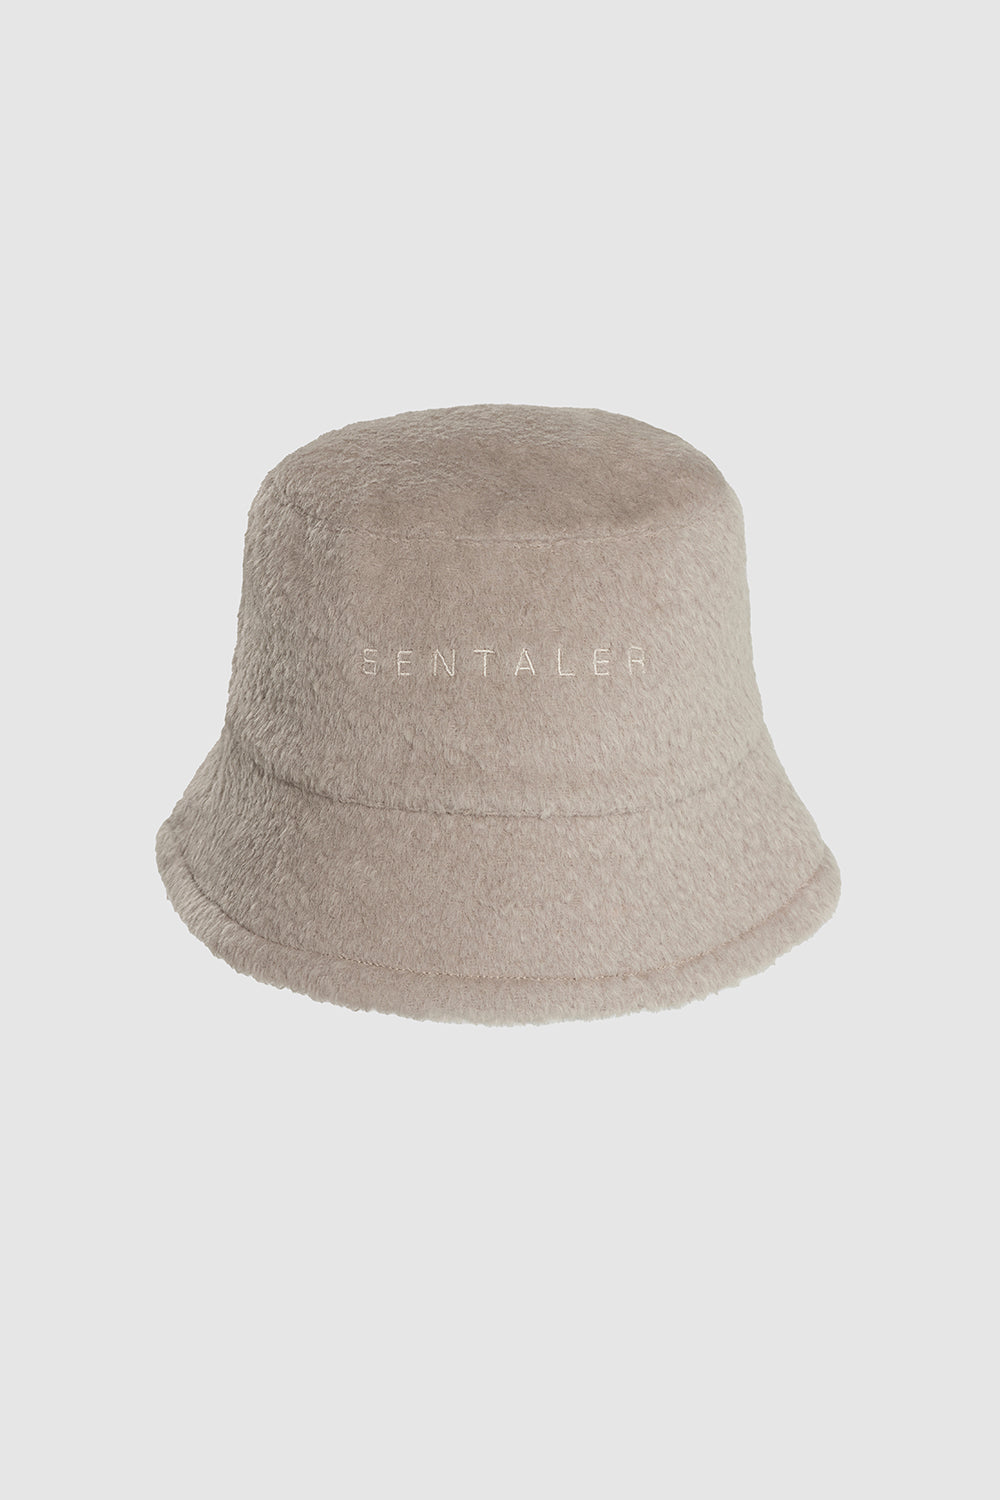 Men's Bouclé Alpaca Bucket Hat in Sand - Size XS/S